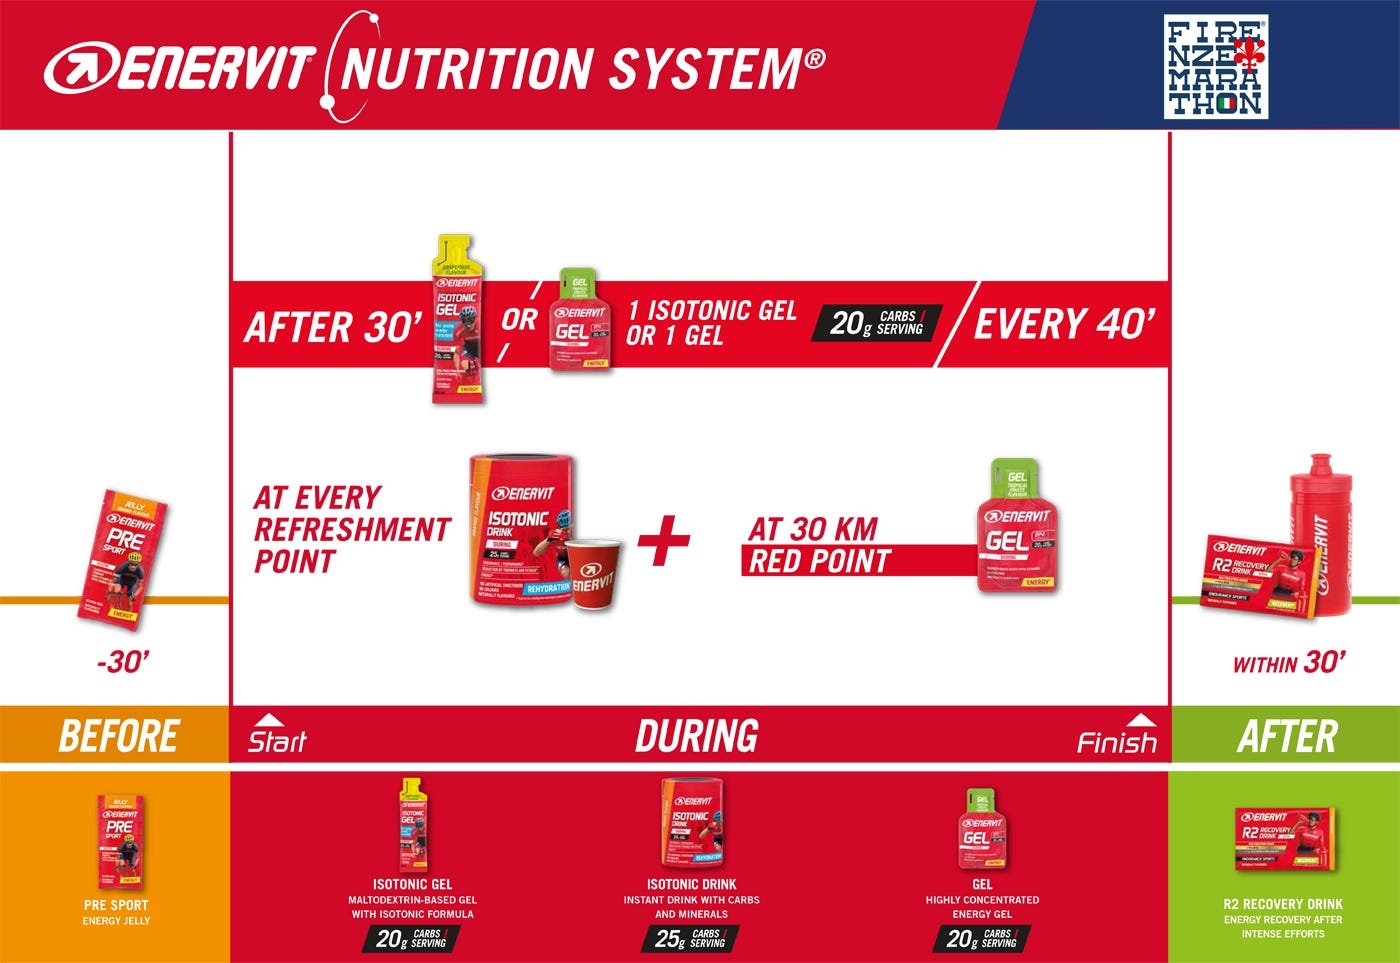 Enervit Nutrition System for Firenze Marathon